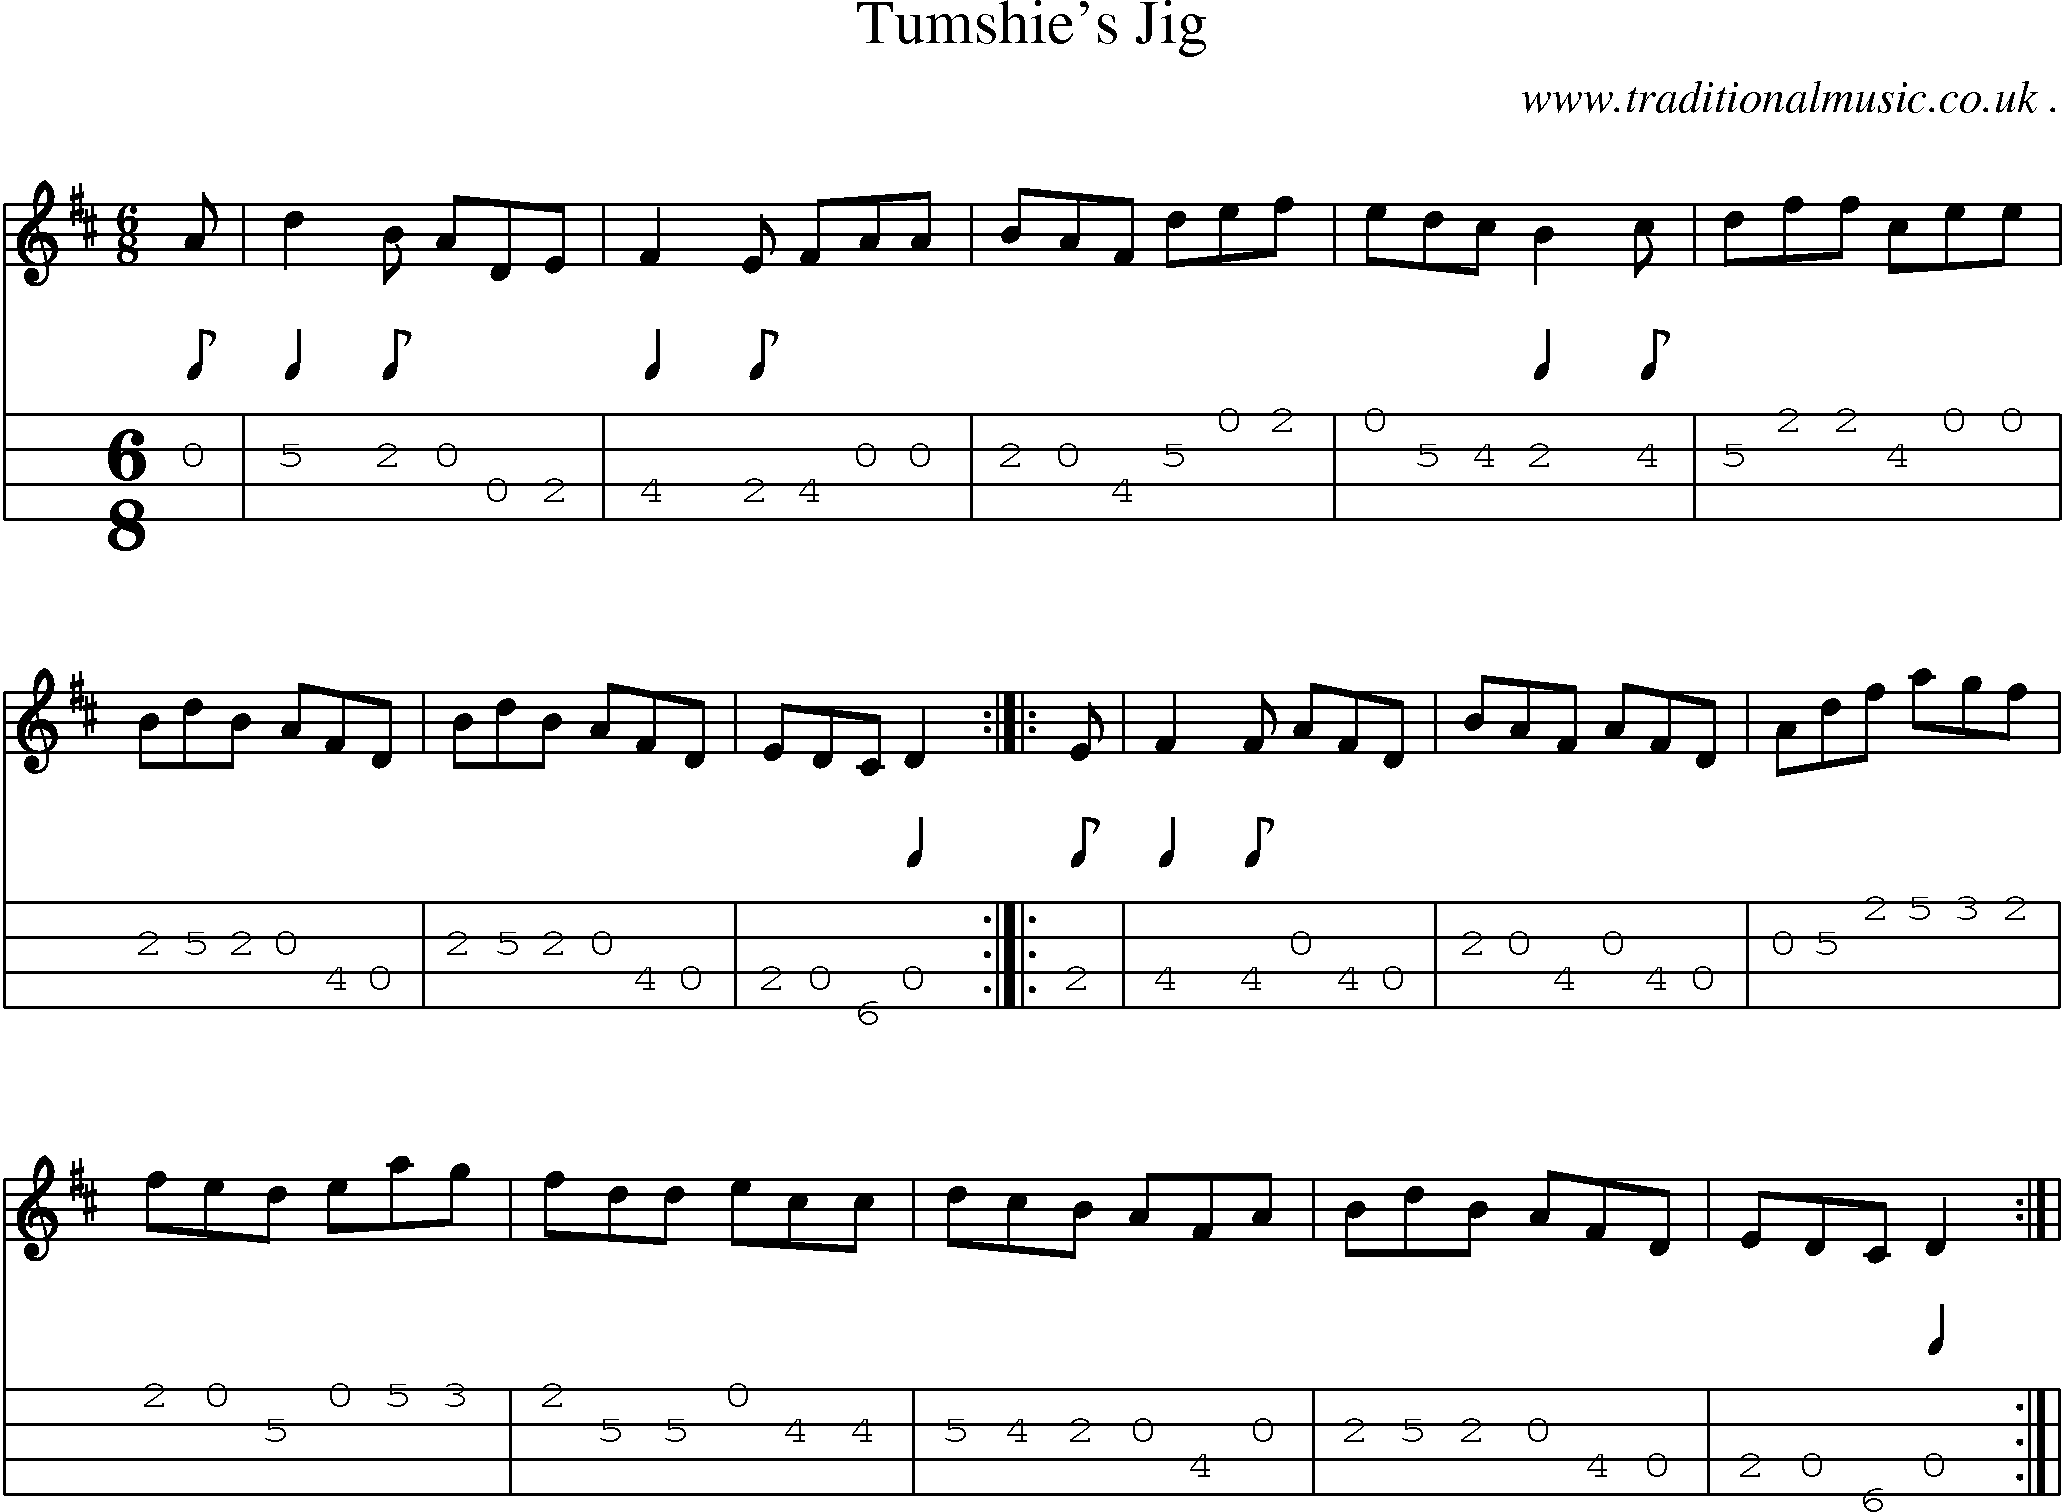 Sheet-Music and Mandolin Tabs for Tumshies Jig